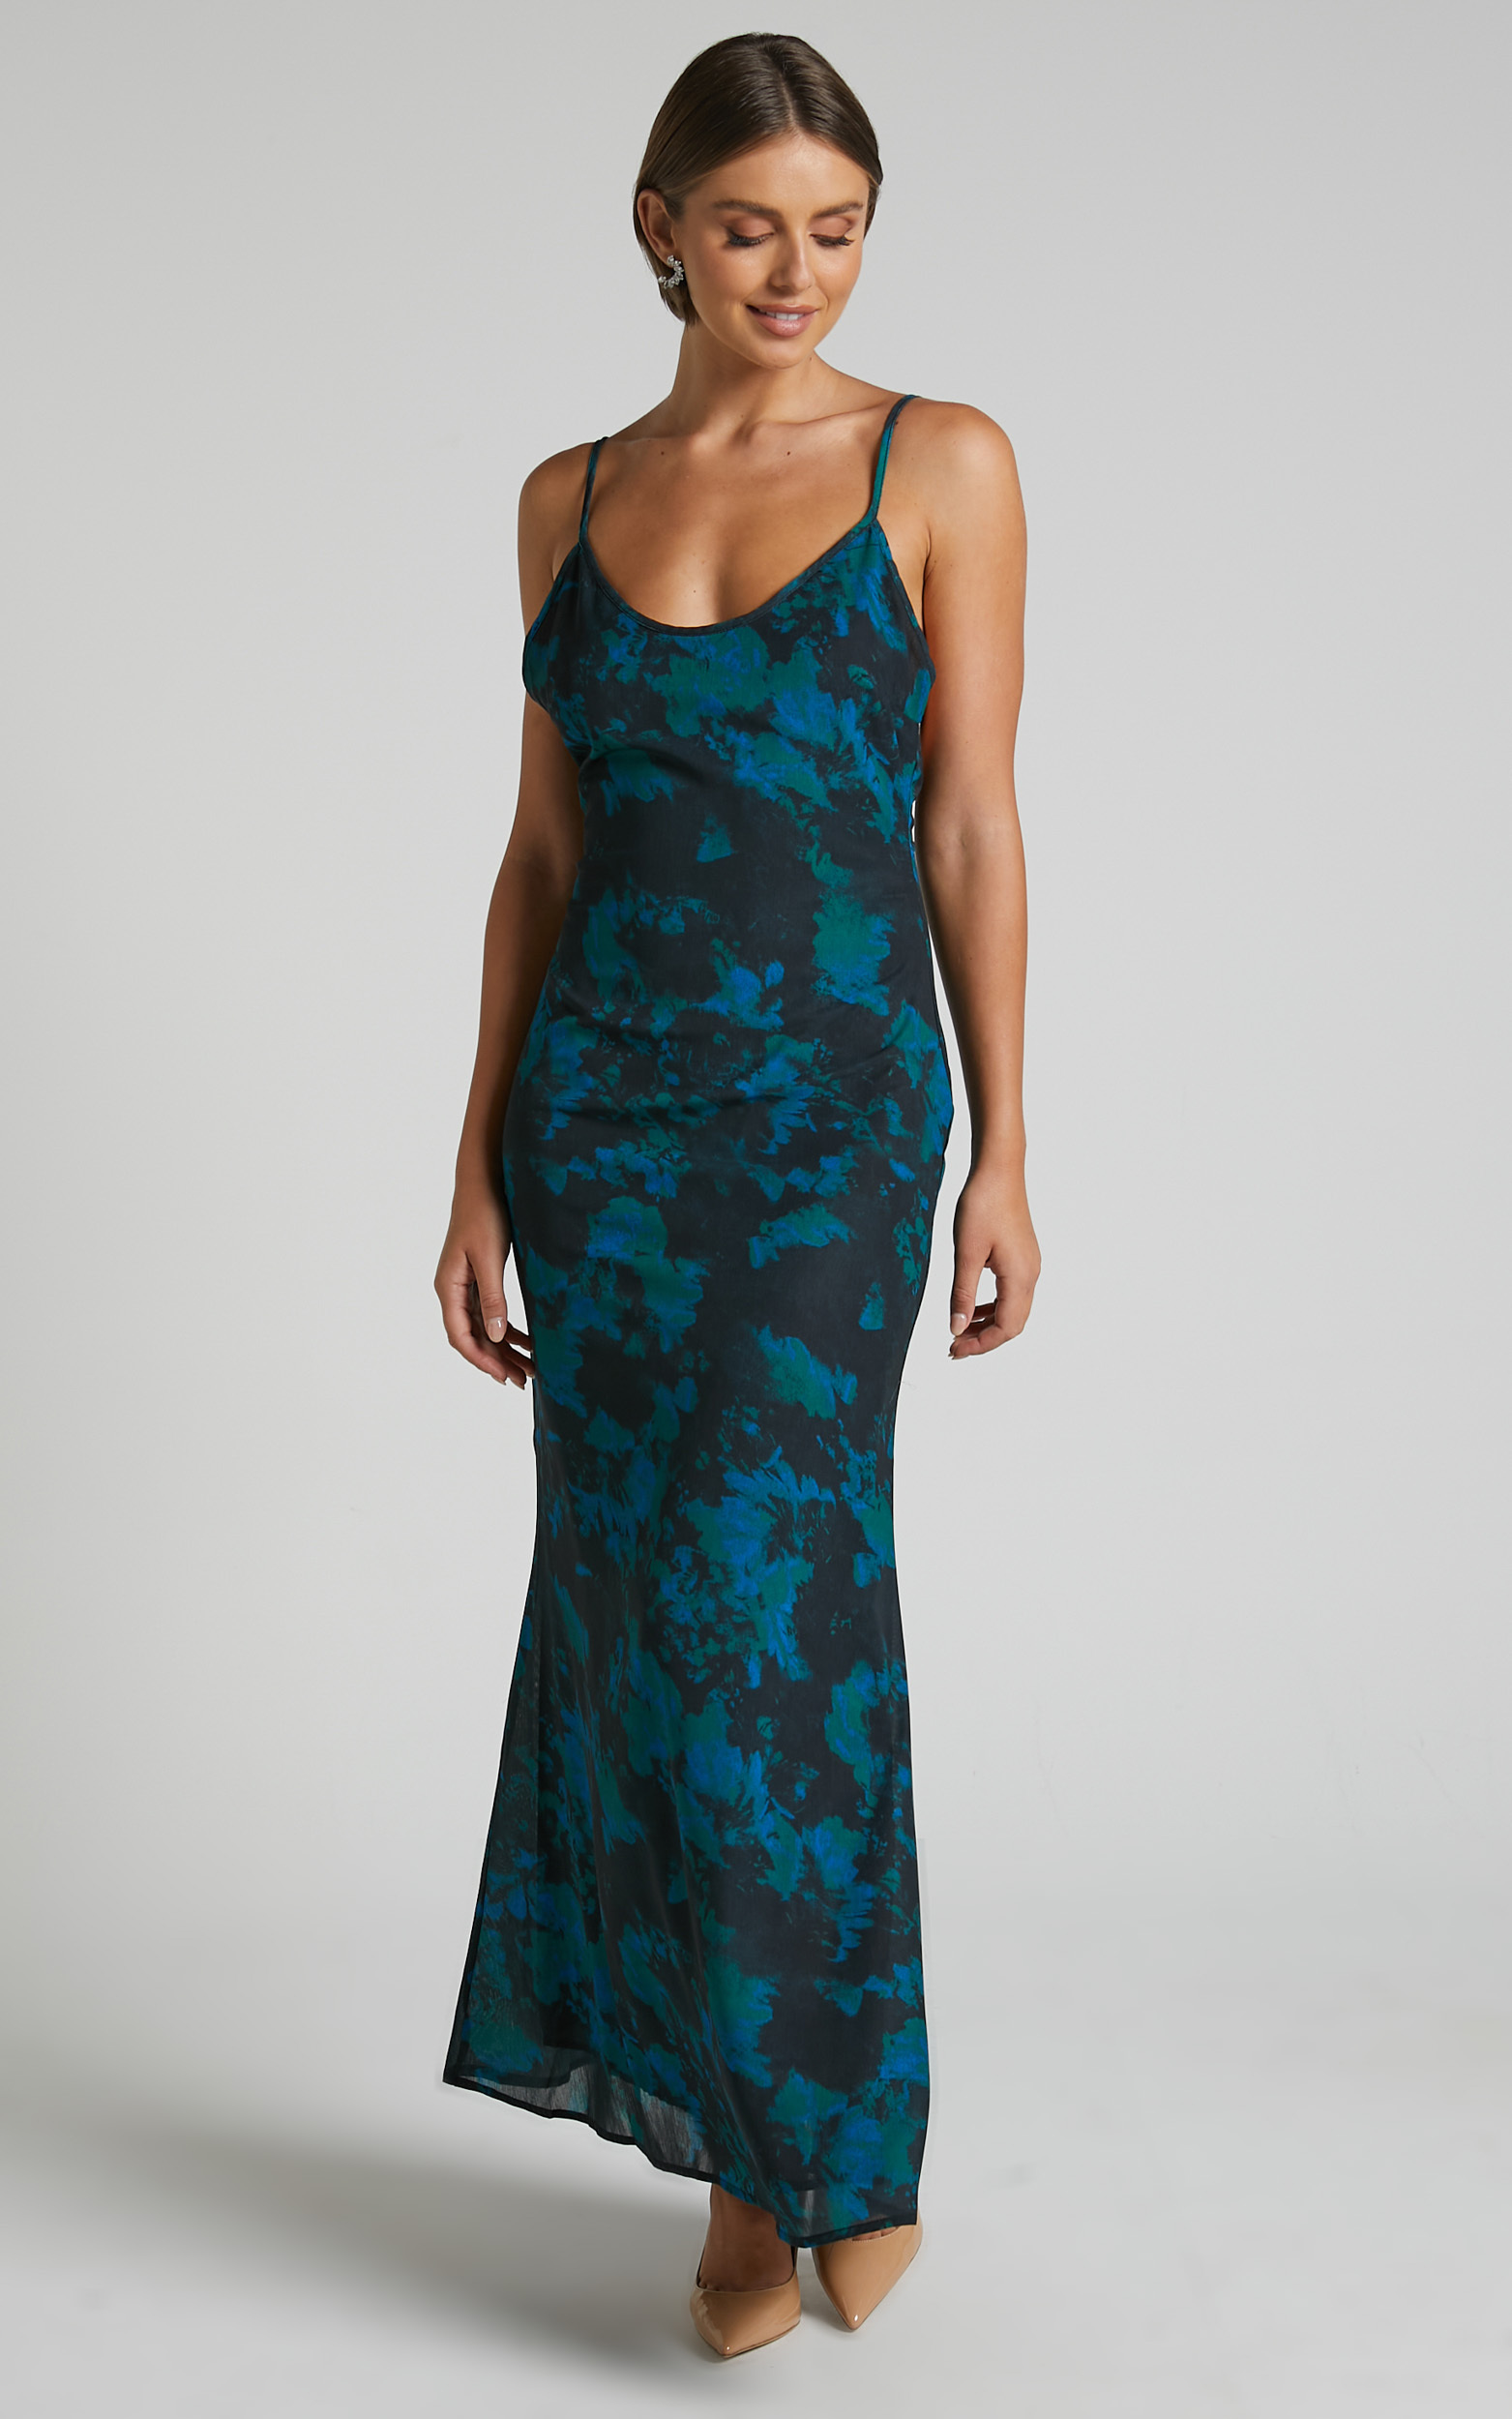 Mirski Low Back Maxi Slip Dress in Jewel Blur - 06, MLT1, hi-res image number null